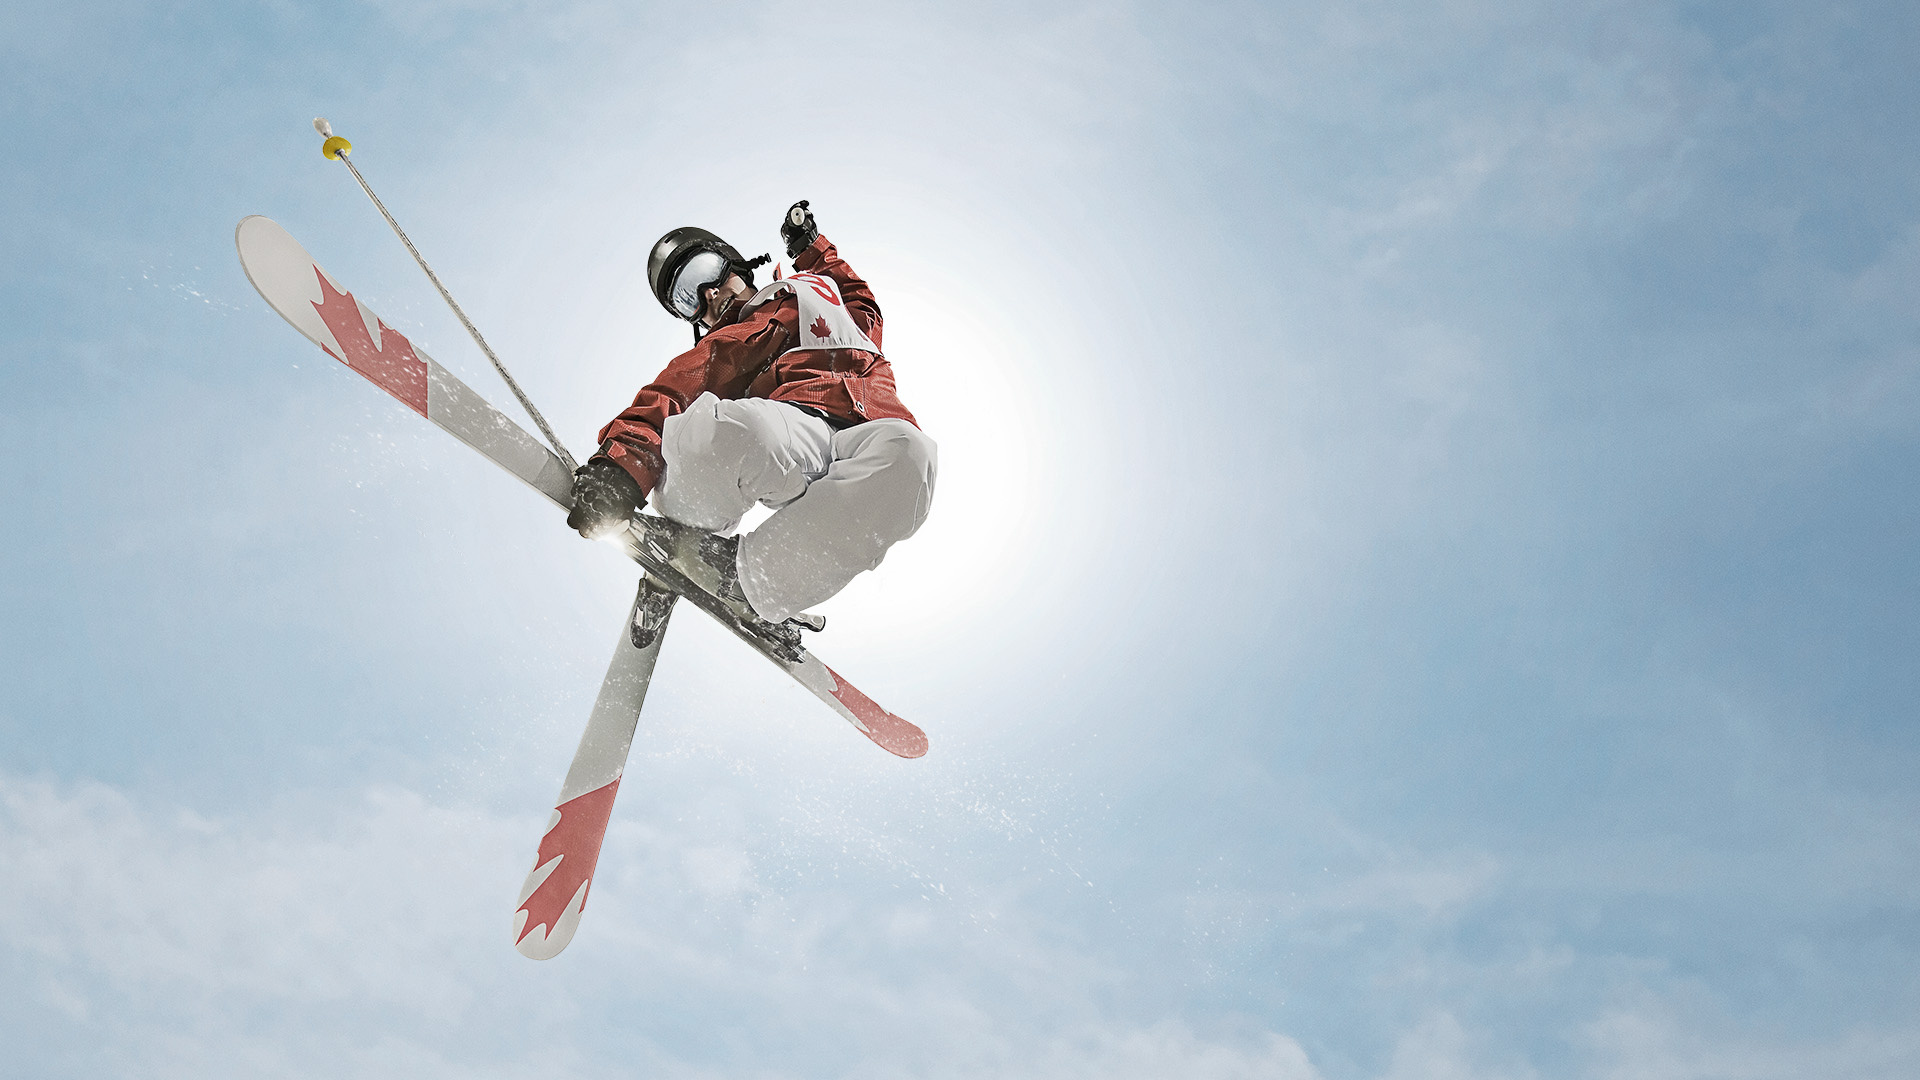 Alpine skiing sports, Skiing wallpaper backgrounds, 1920x1080 Full HD Desktop